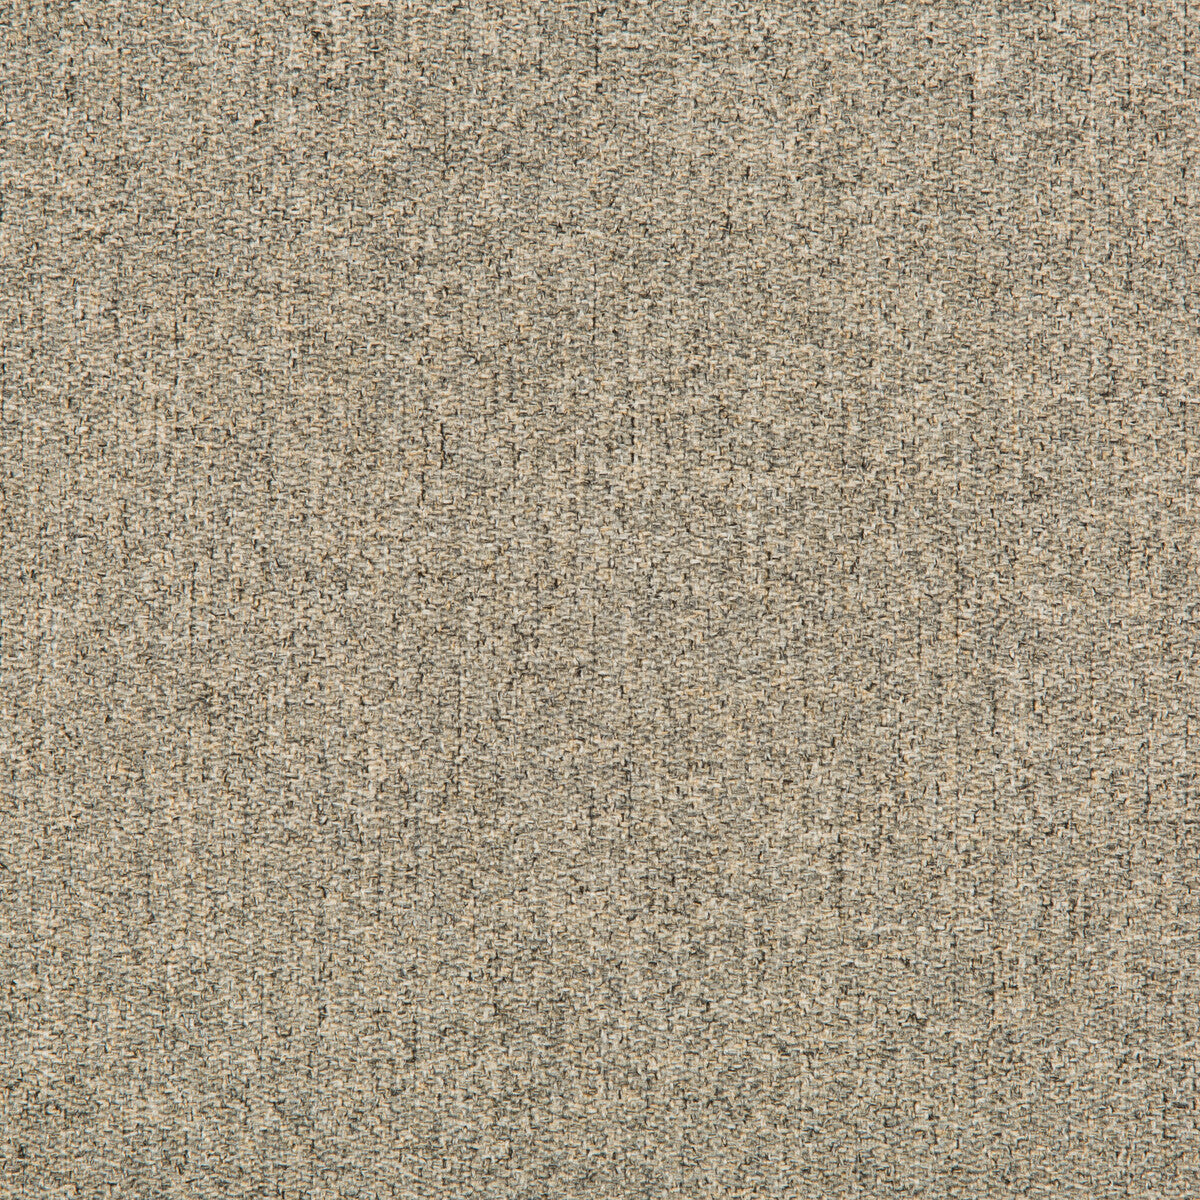 Tweedford fabric in linen color - pattern 35346.16.0 - by Kravet Basics